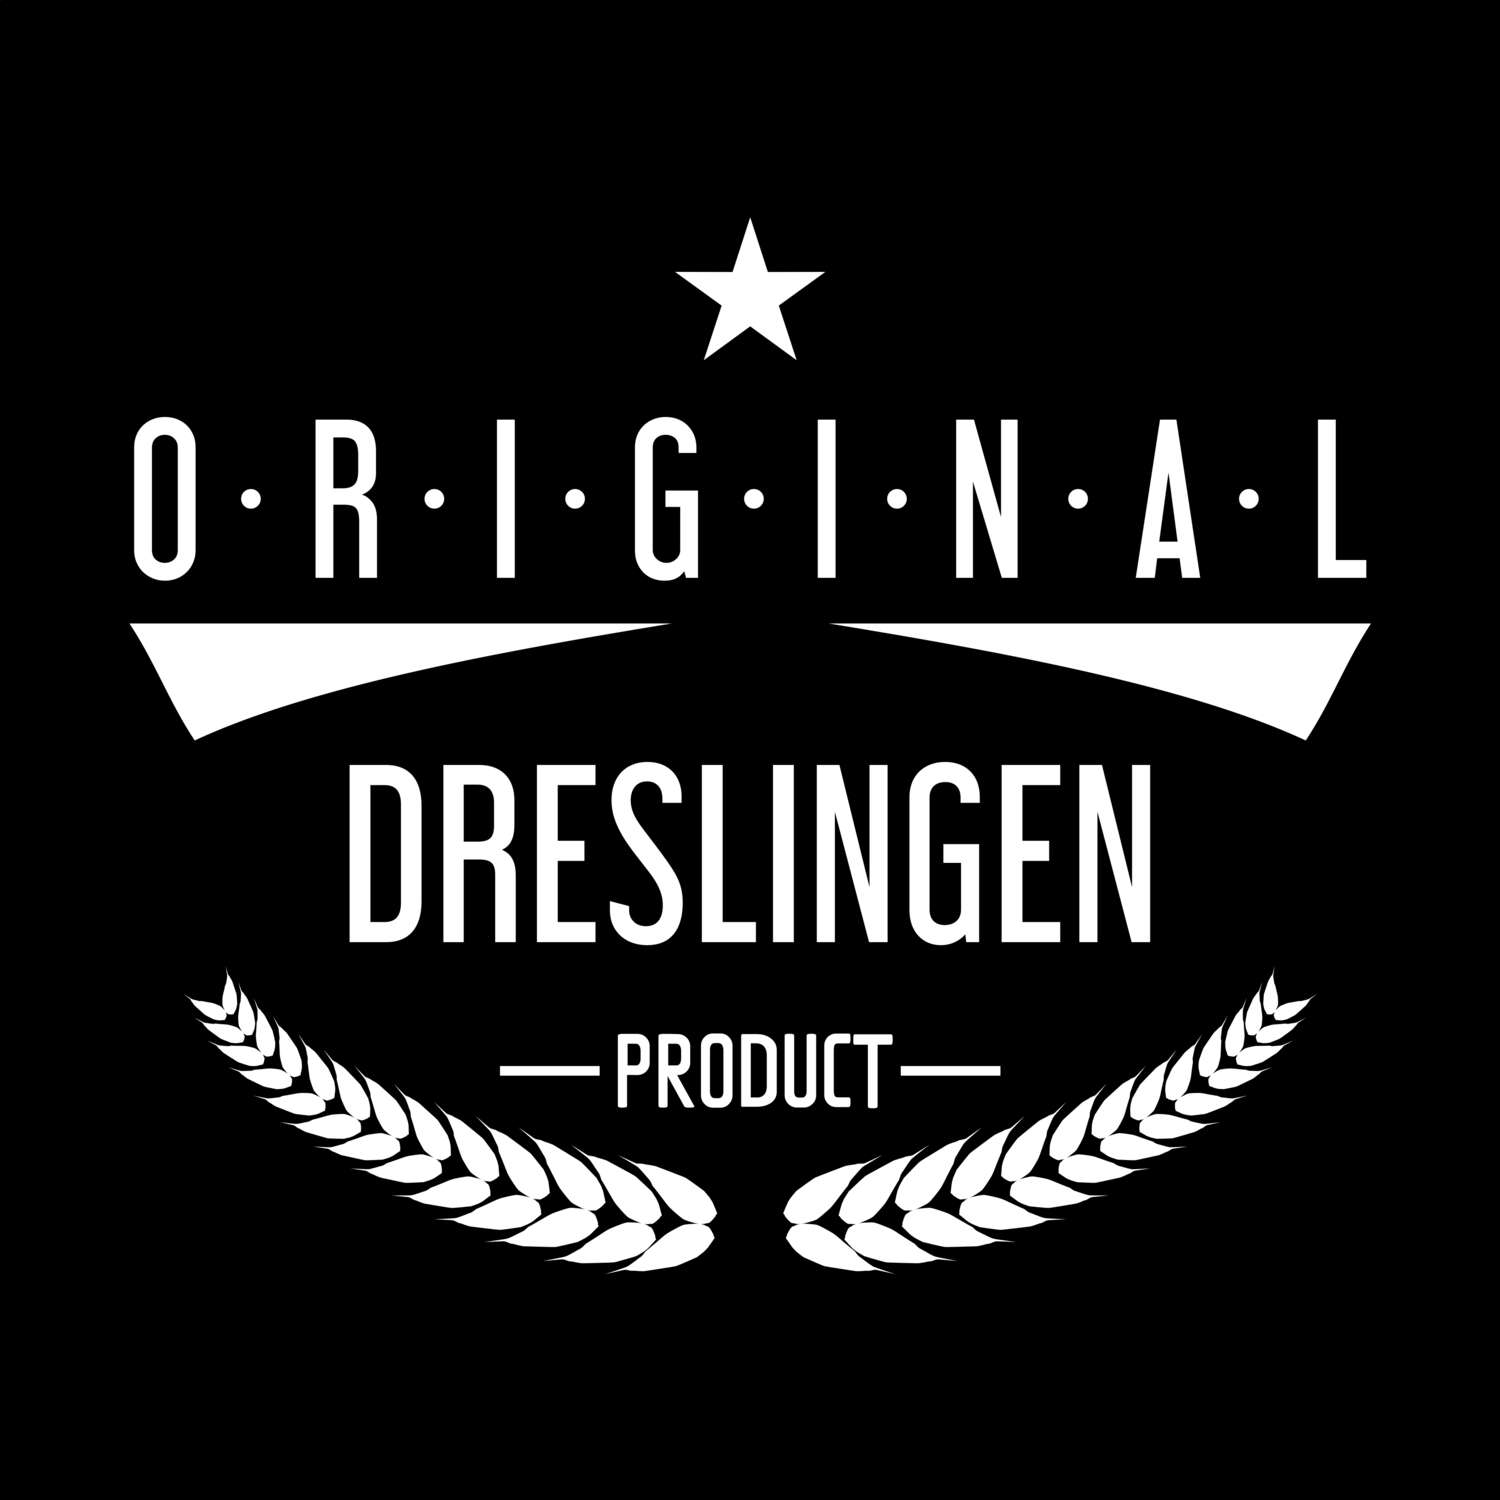 Dreslingen T-Shirt »Original Product«